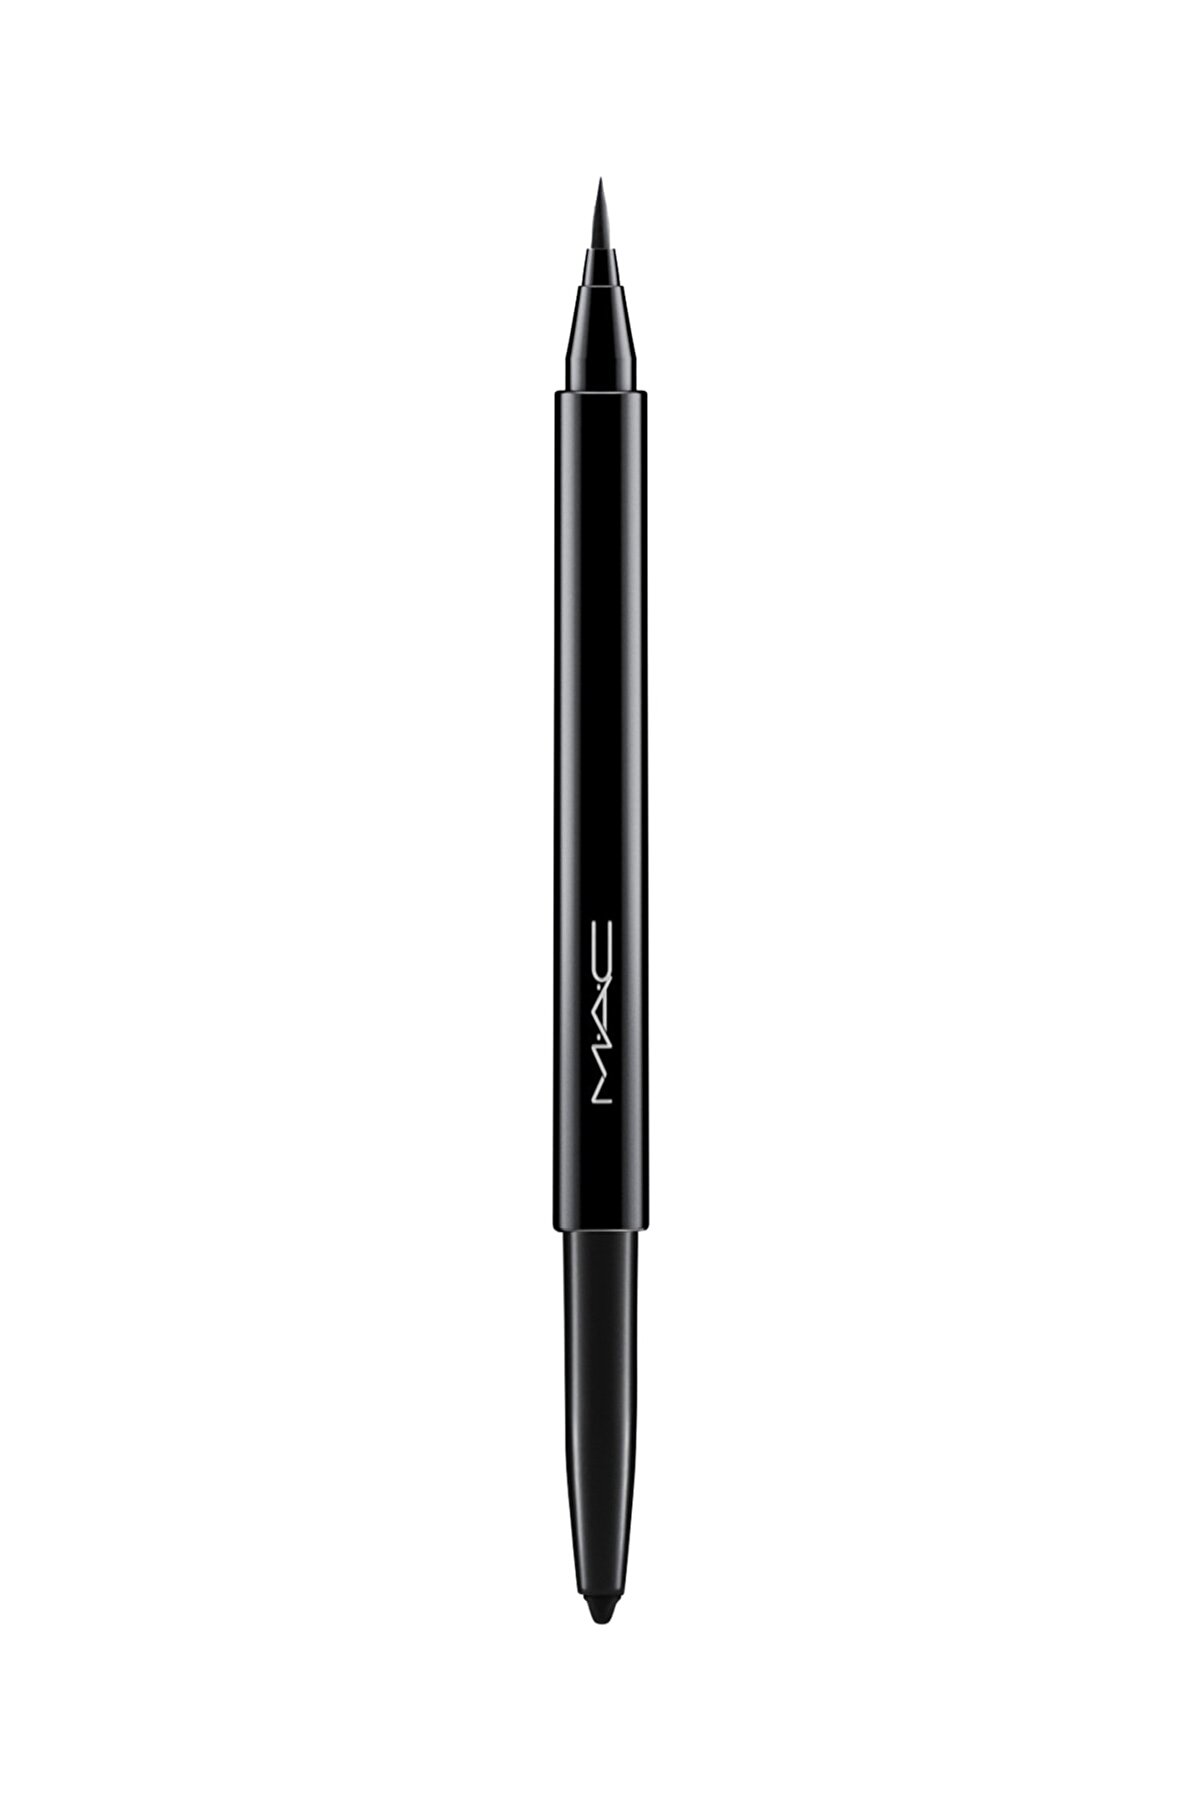 Mac Suya Dayanıklı Eyeliner - M·A·C Dual Dare All-Day Dare Black 773602500482